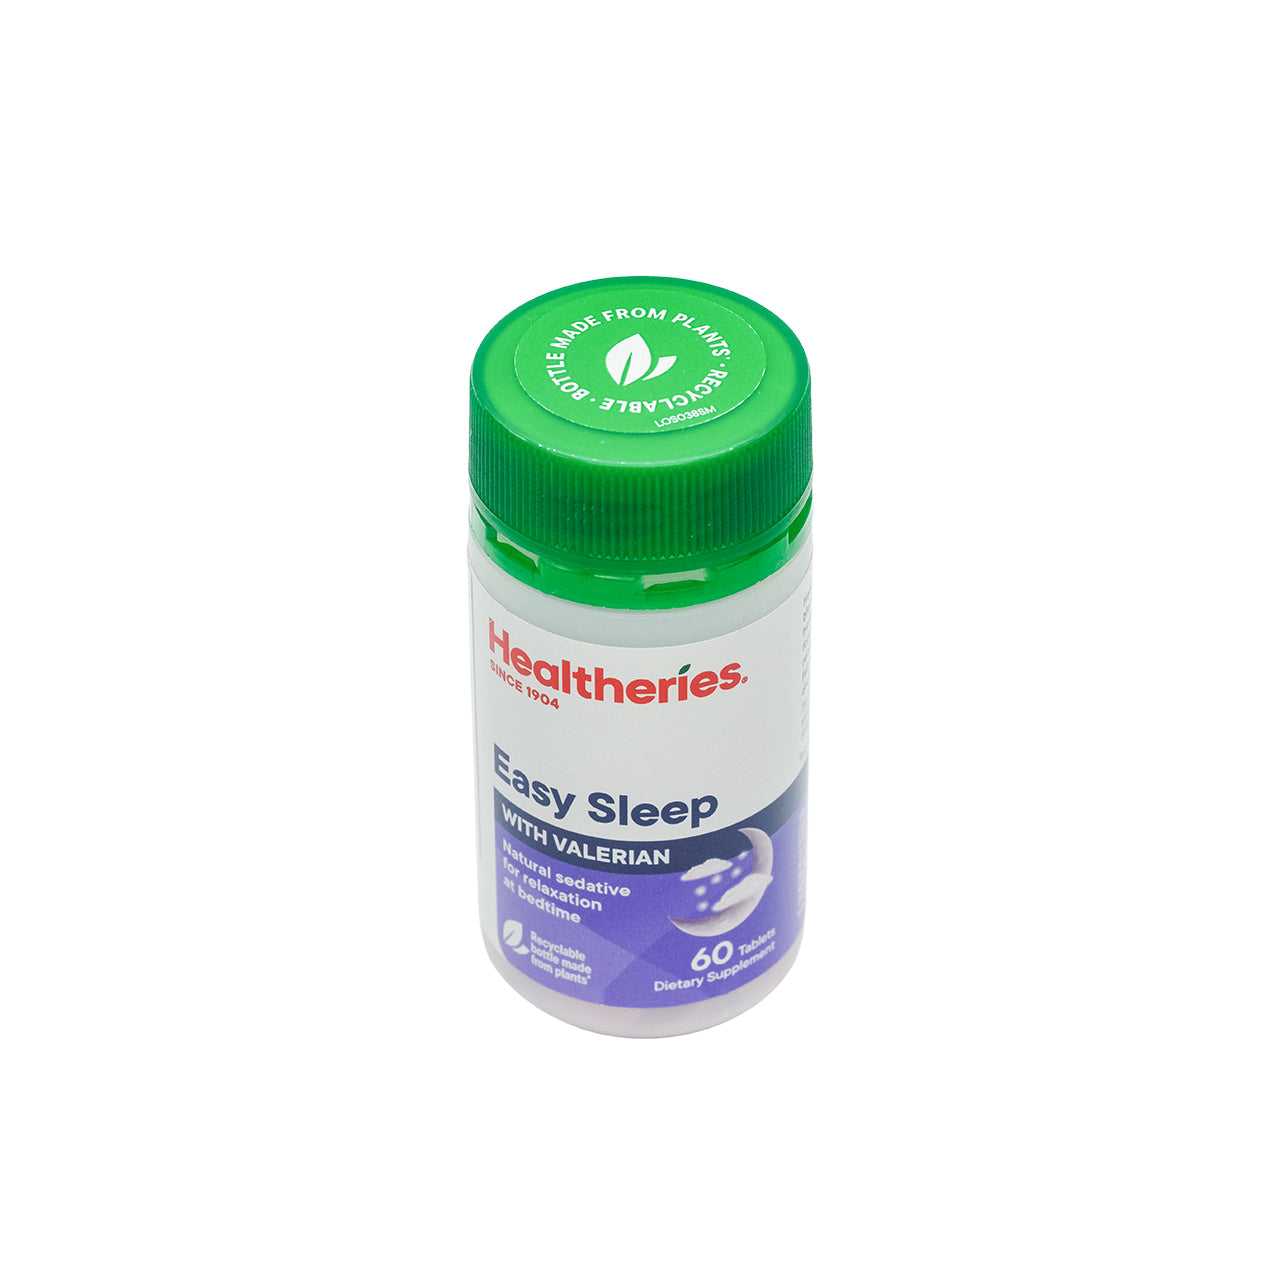 Healtheries Easy Sleep With Valerian 60 Tablets | Sasa Global eShop